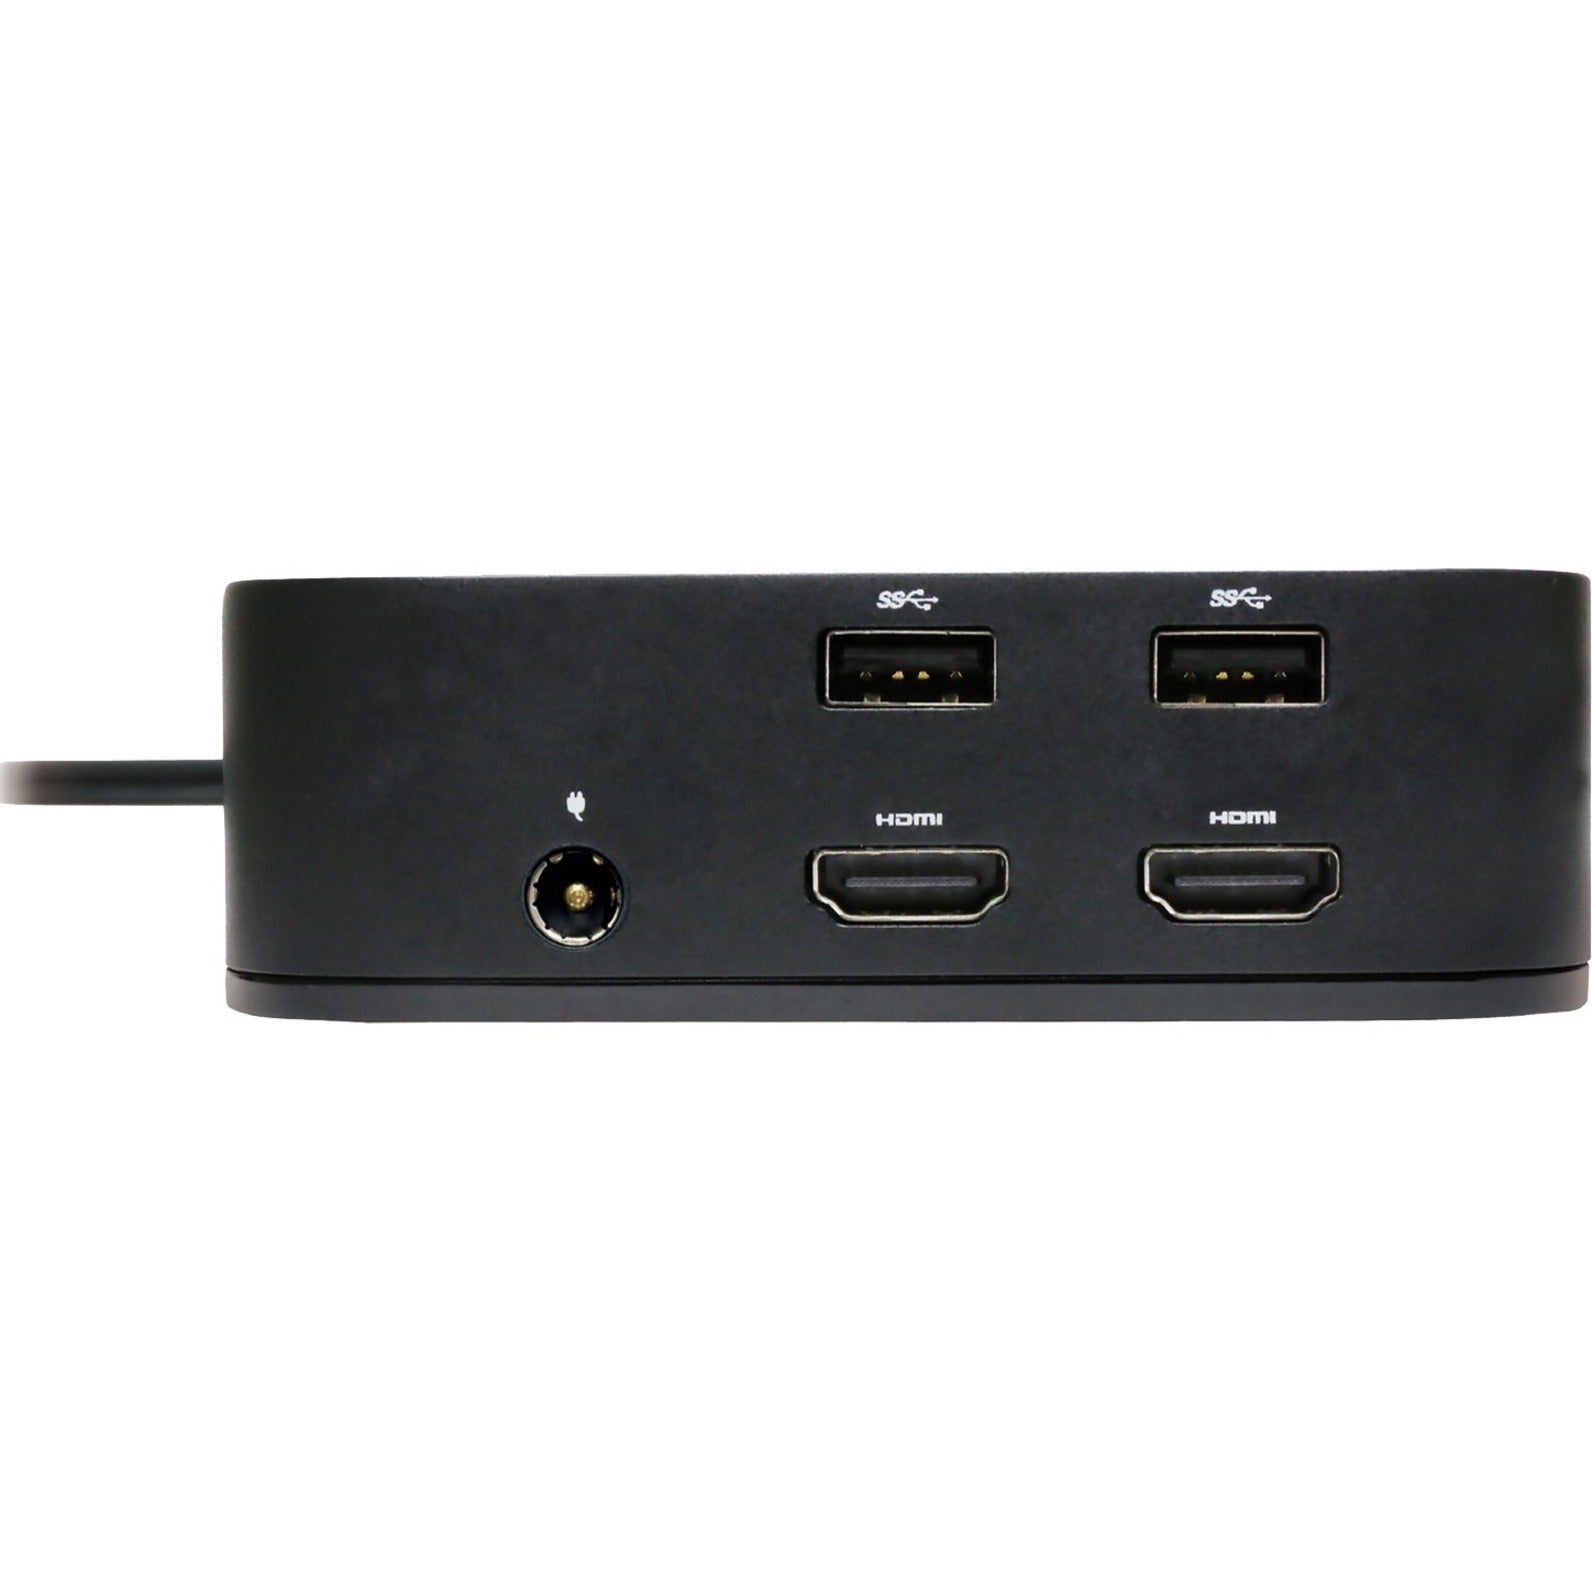 Accell K172B-010B Air USB-C Docking Station - 100W PD, 4K Dual Display, 5 USB Ports